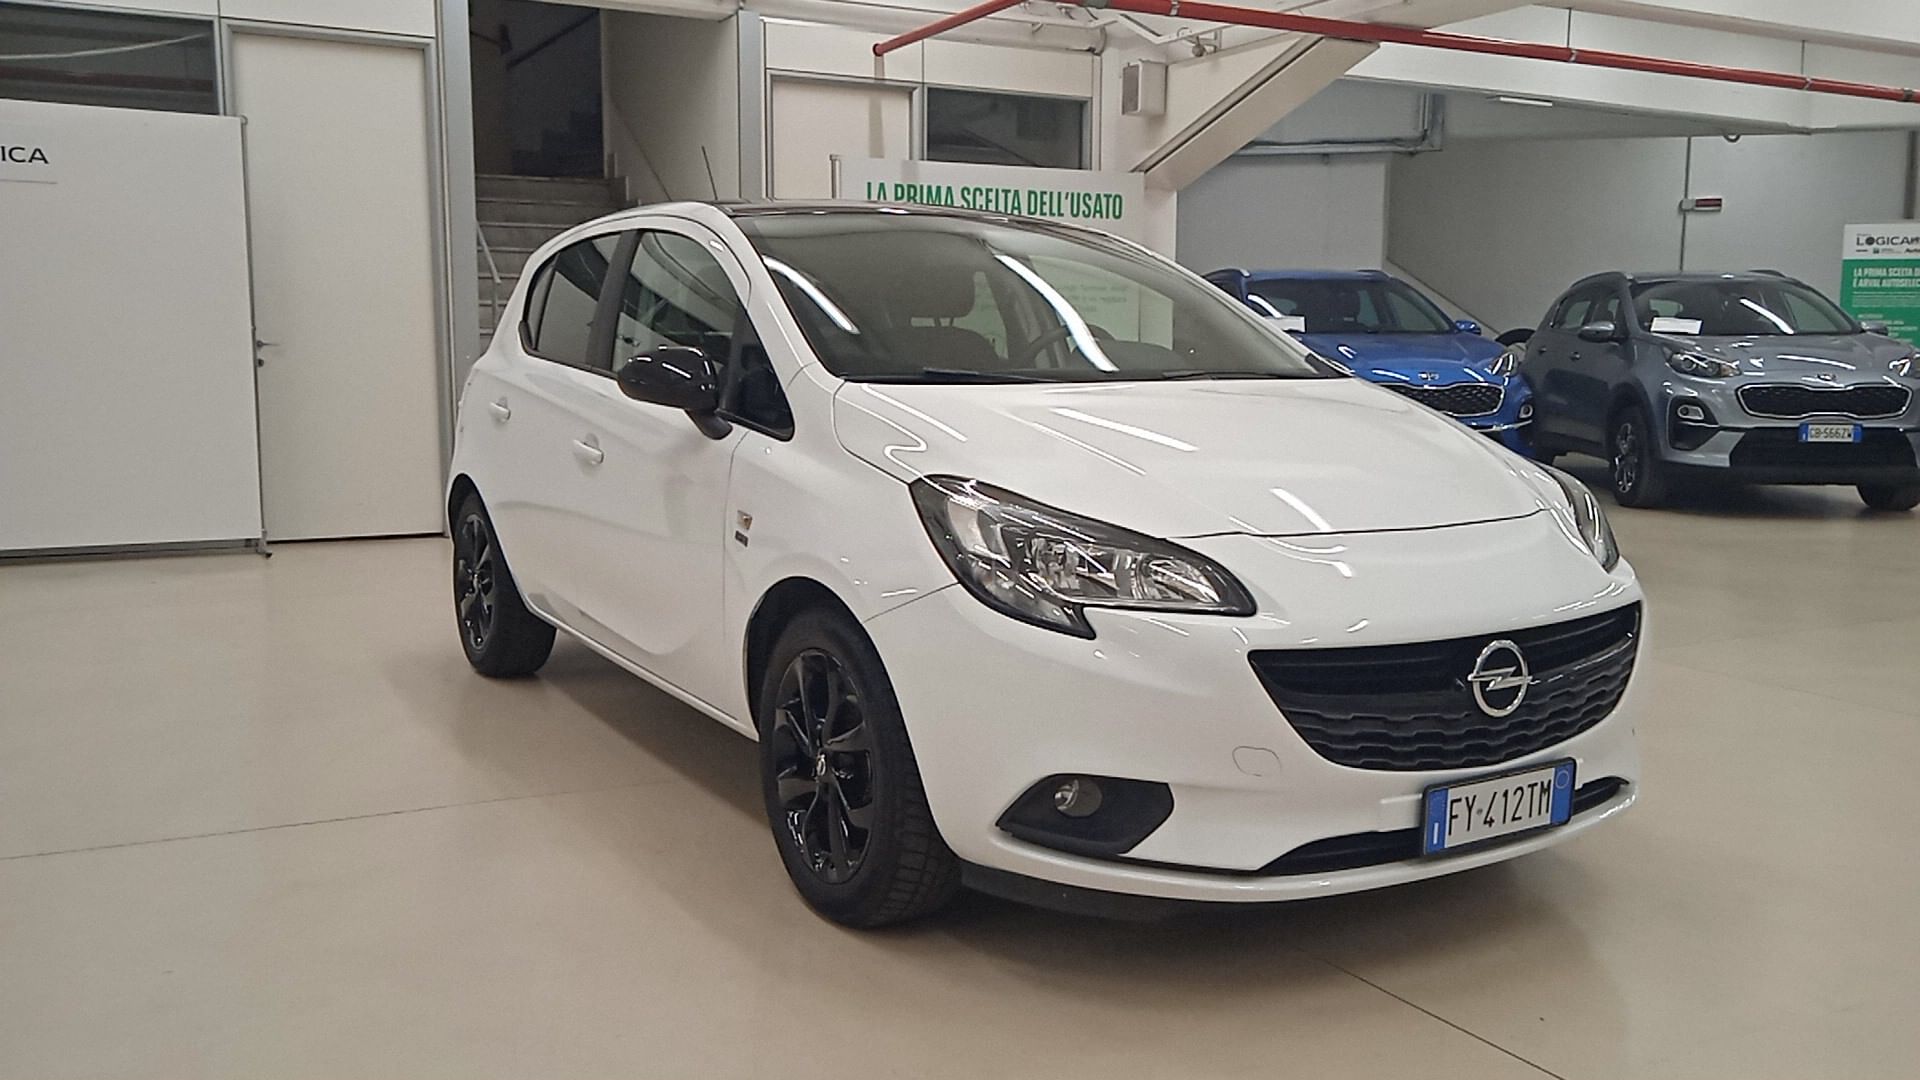 Opel Corsa 1.4